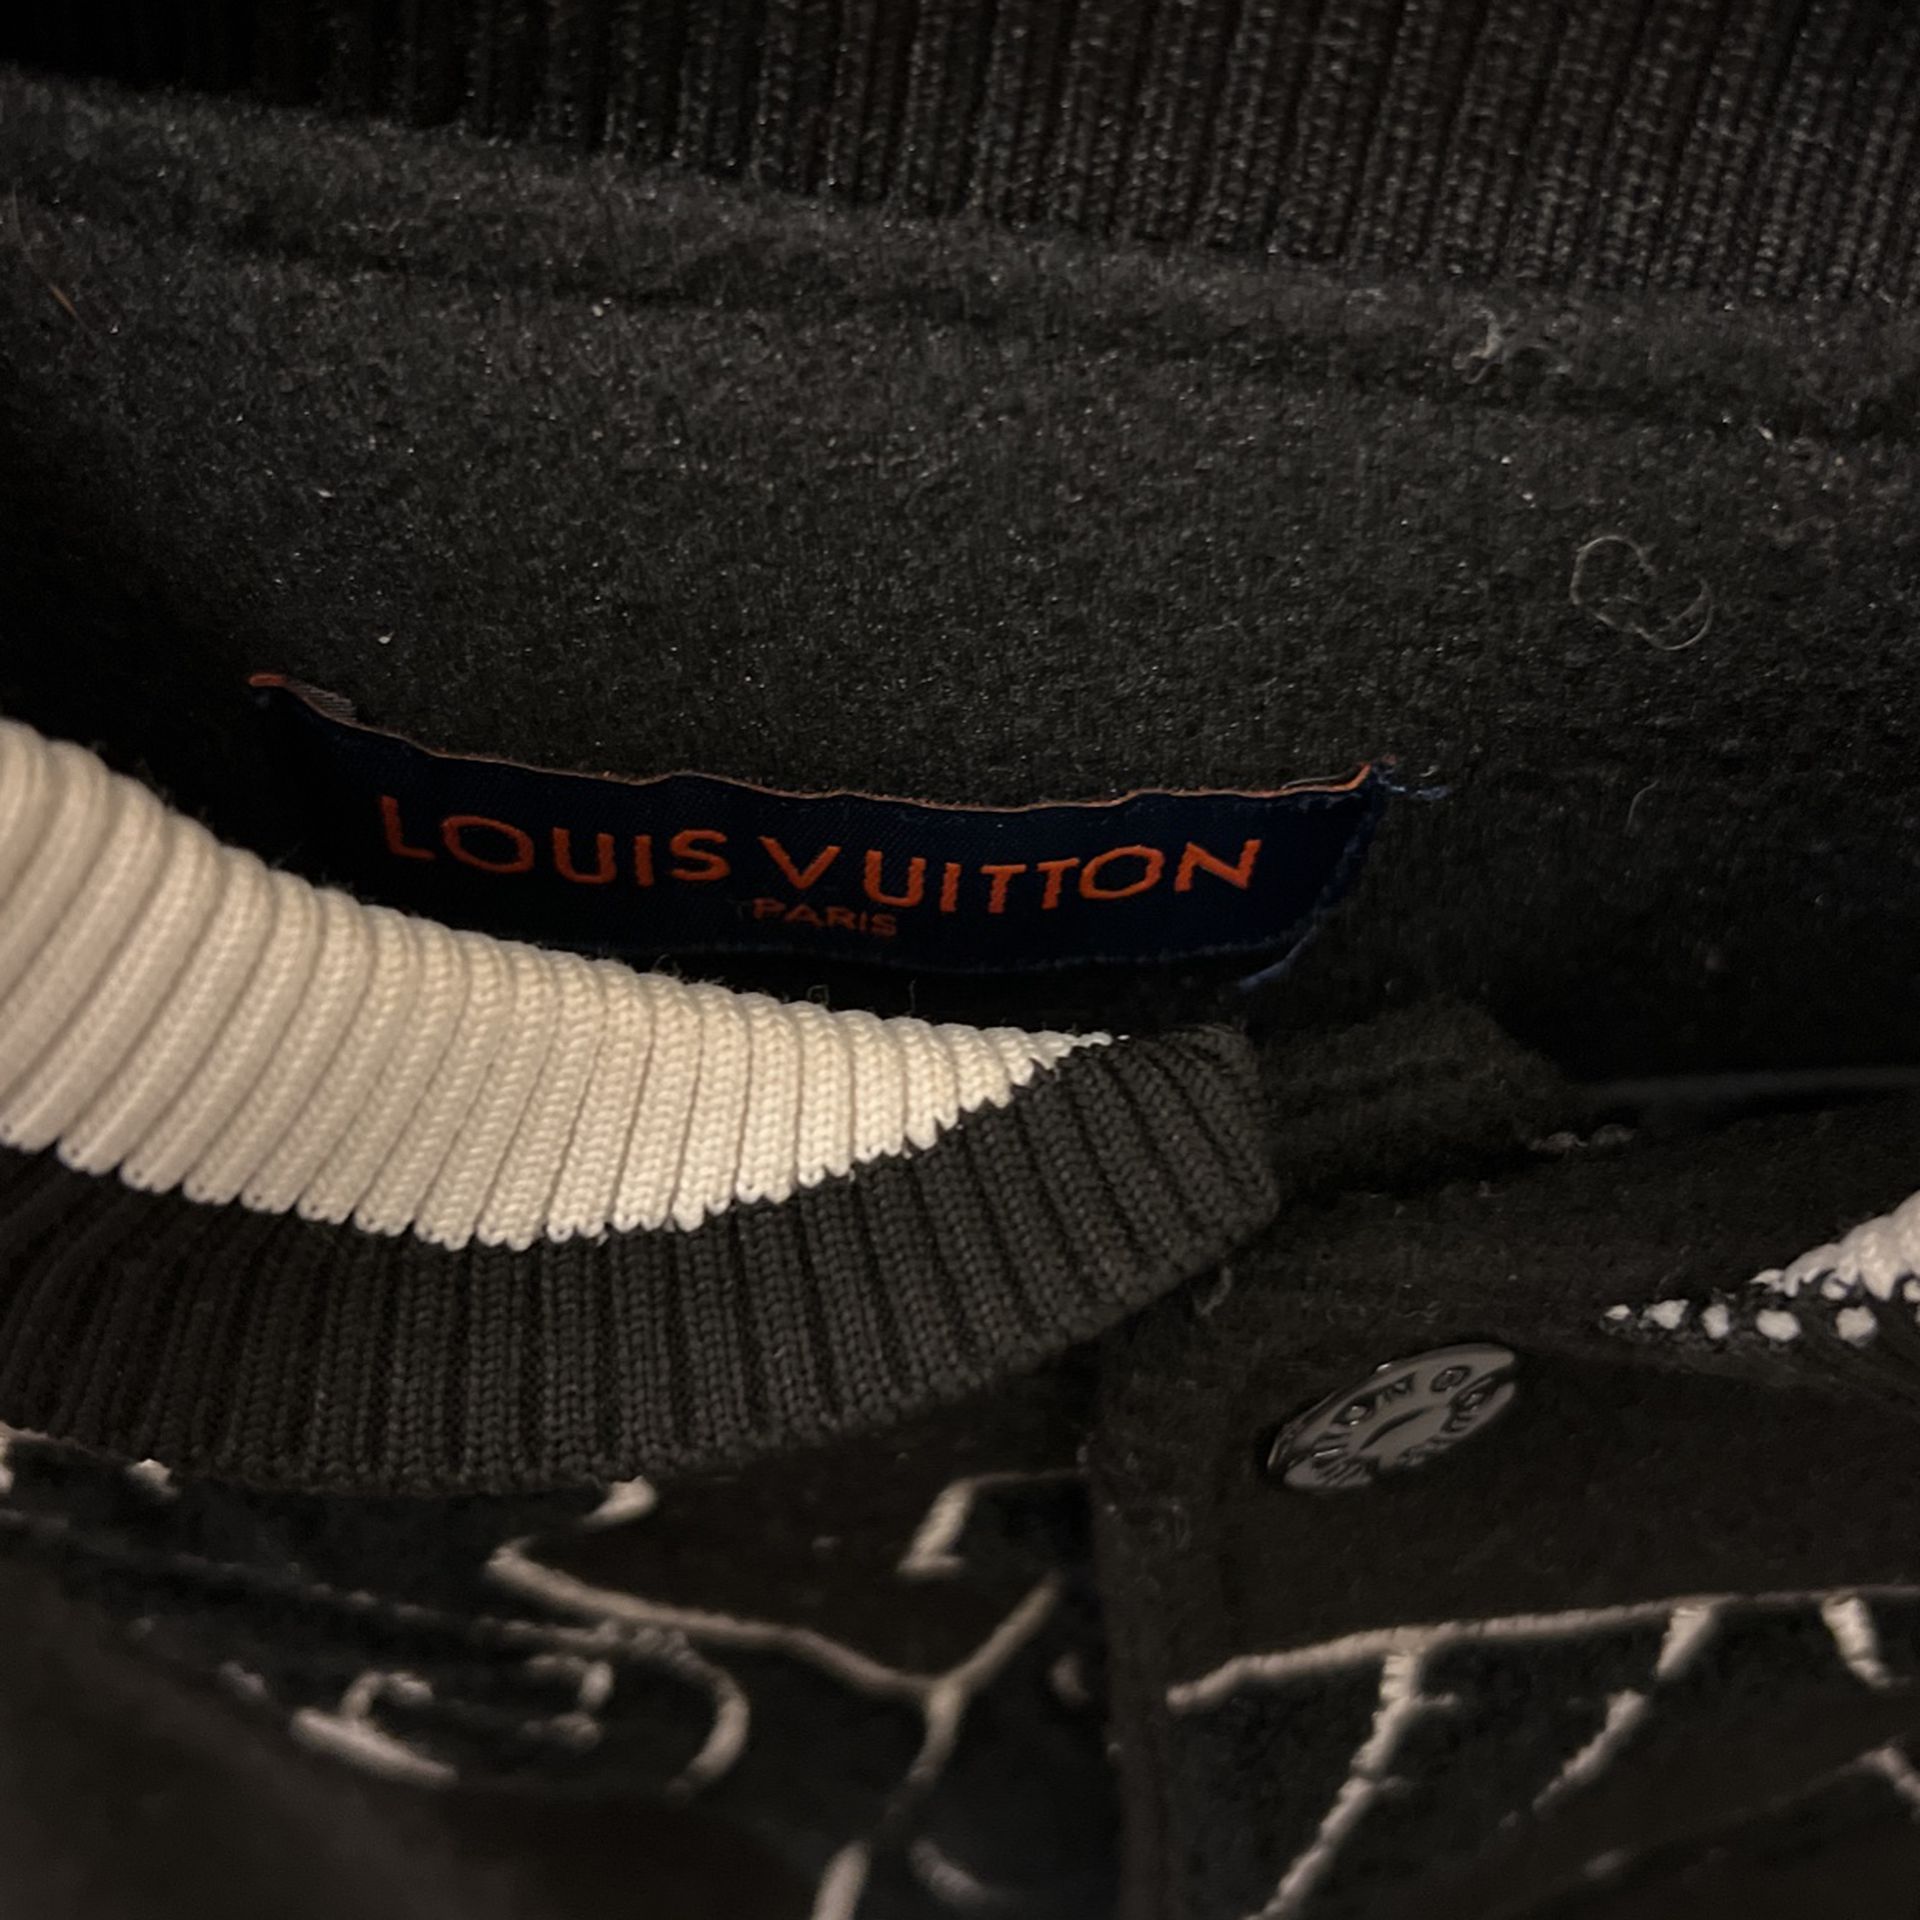 Louie Vuitton NBA Jacket for Sale in Santa Monica, CA - OfferUp